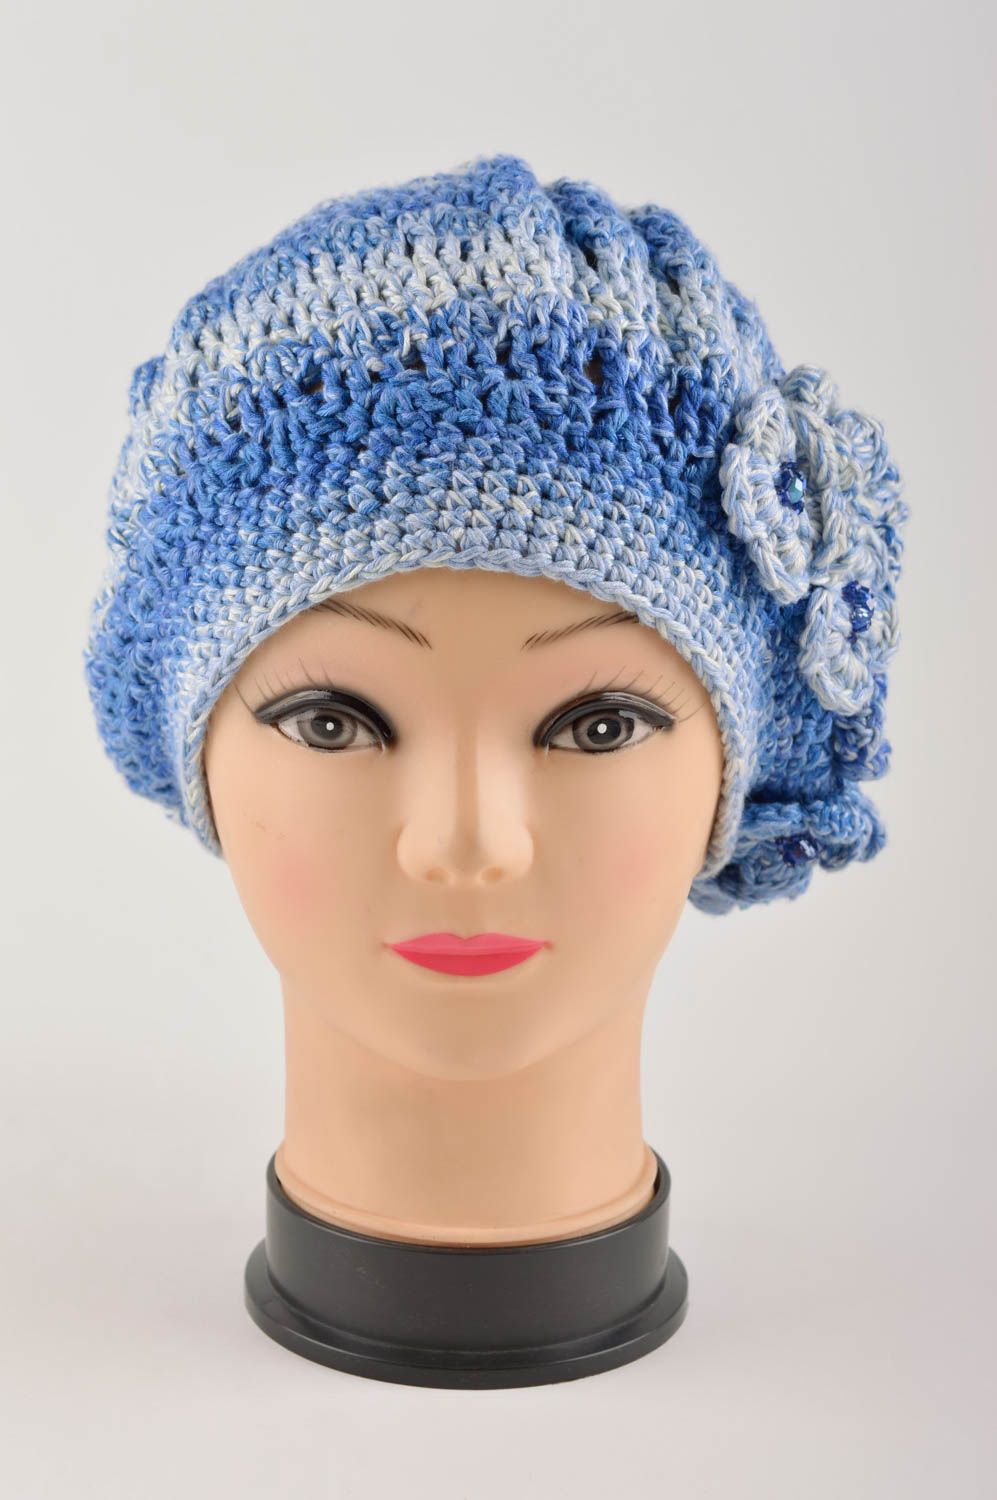 Handmade crochet hat designer accessories hats for women warm hat gifts for girl photo 3